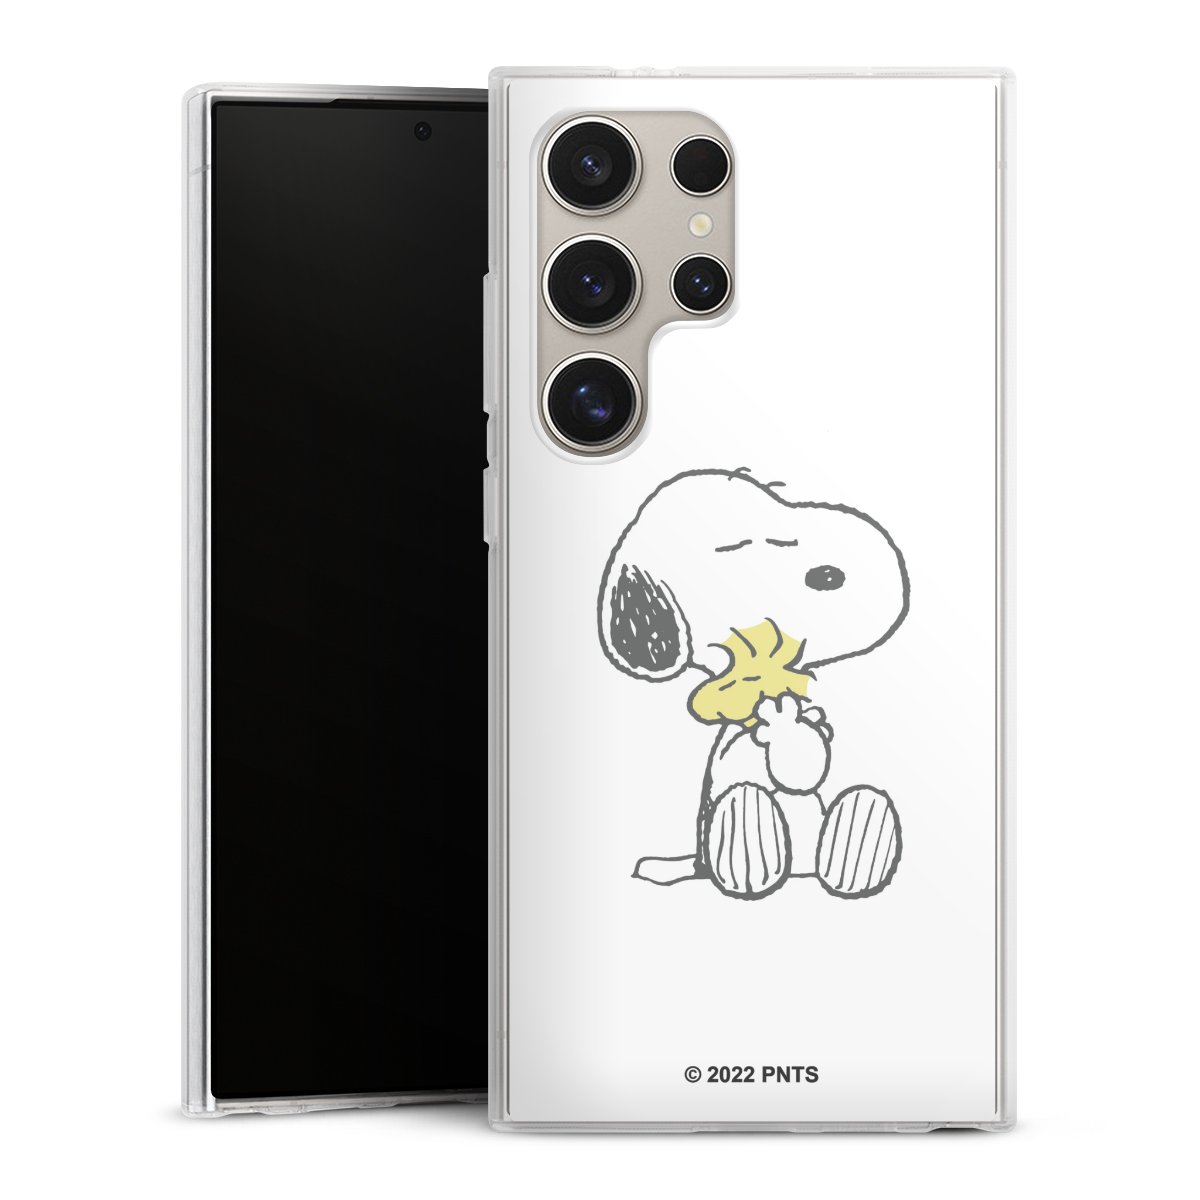 Snoopy And Woodstock kuscheln